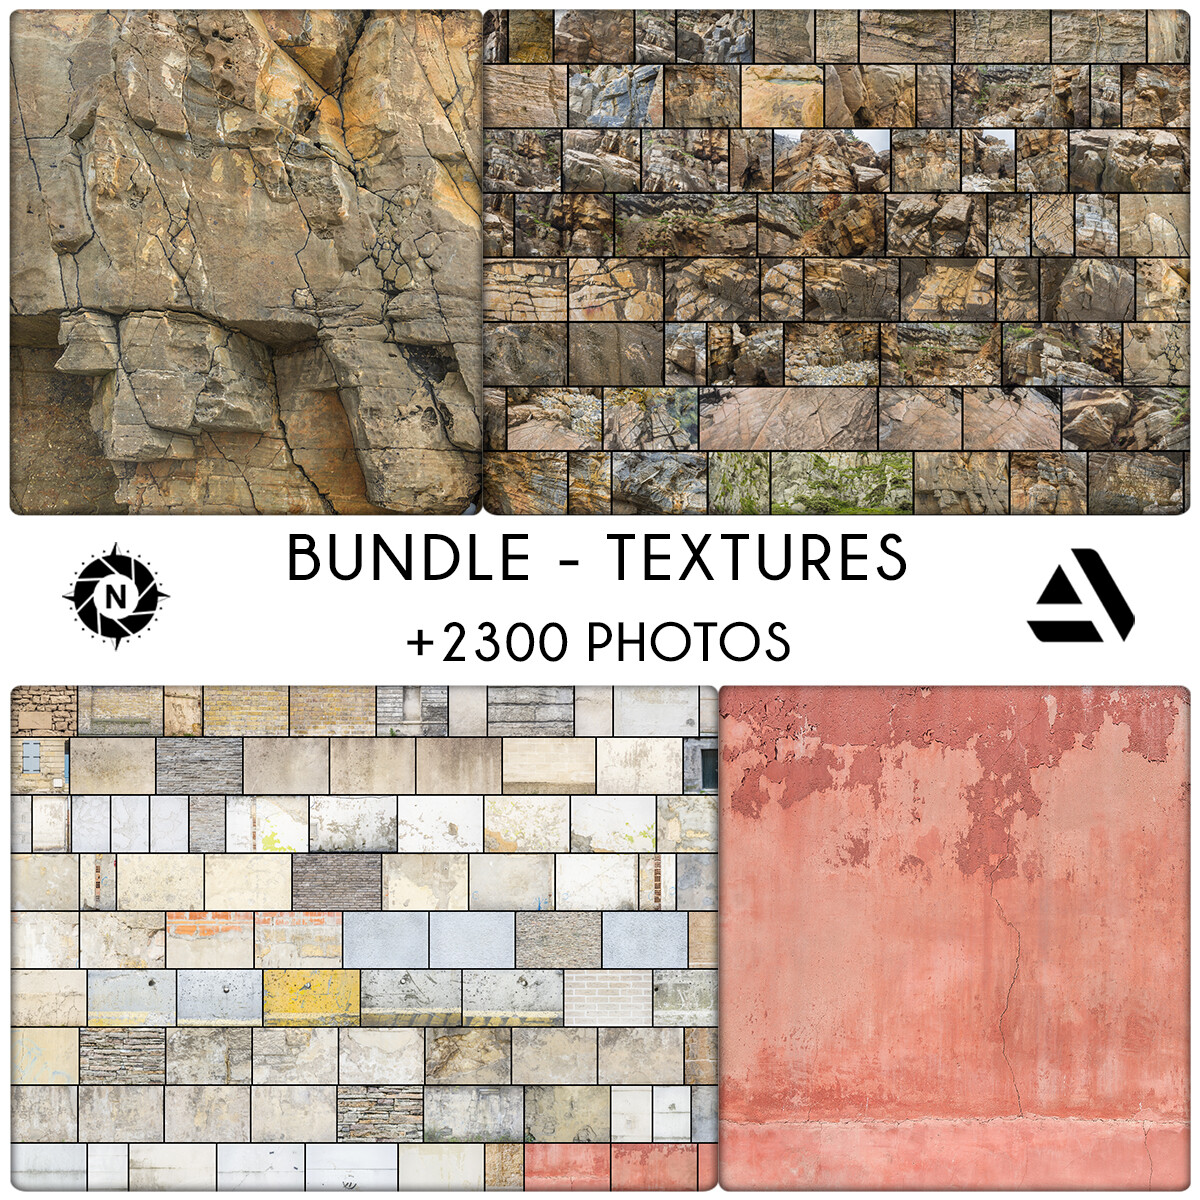 Bundle: Texture Reference Photos - Freelance License

https://www.artstation.com/a/5465289